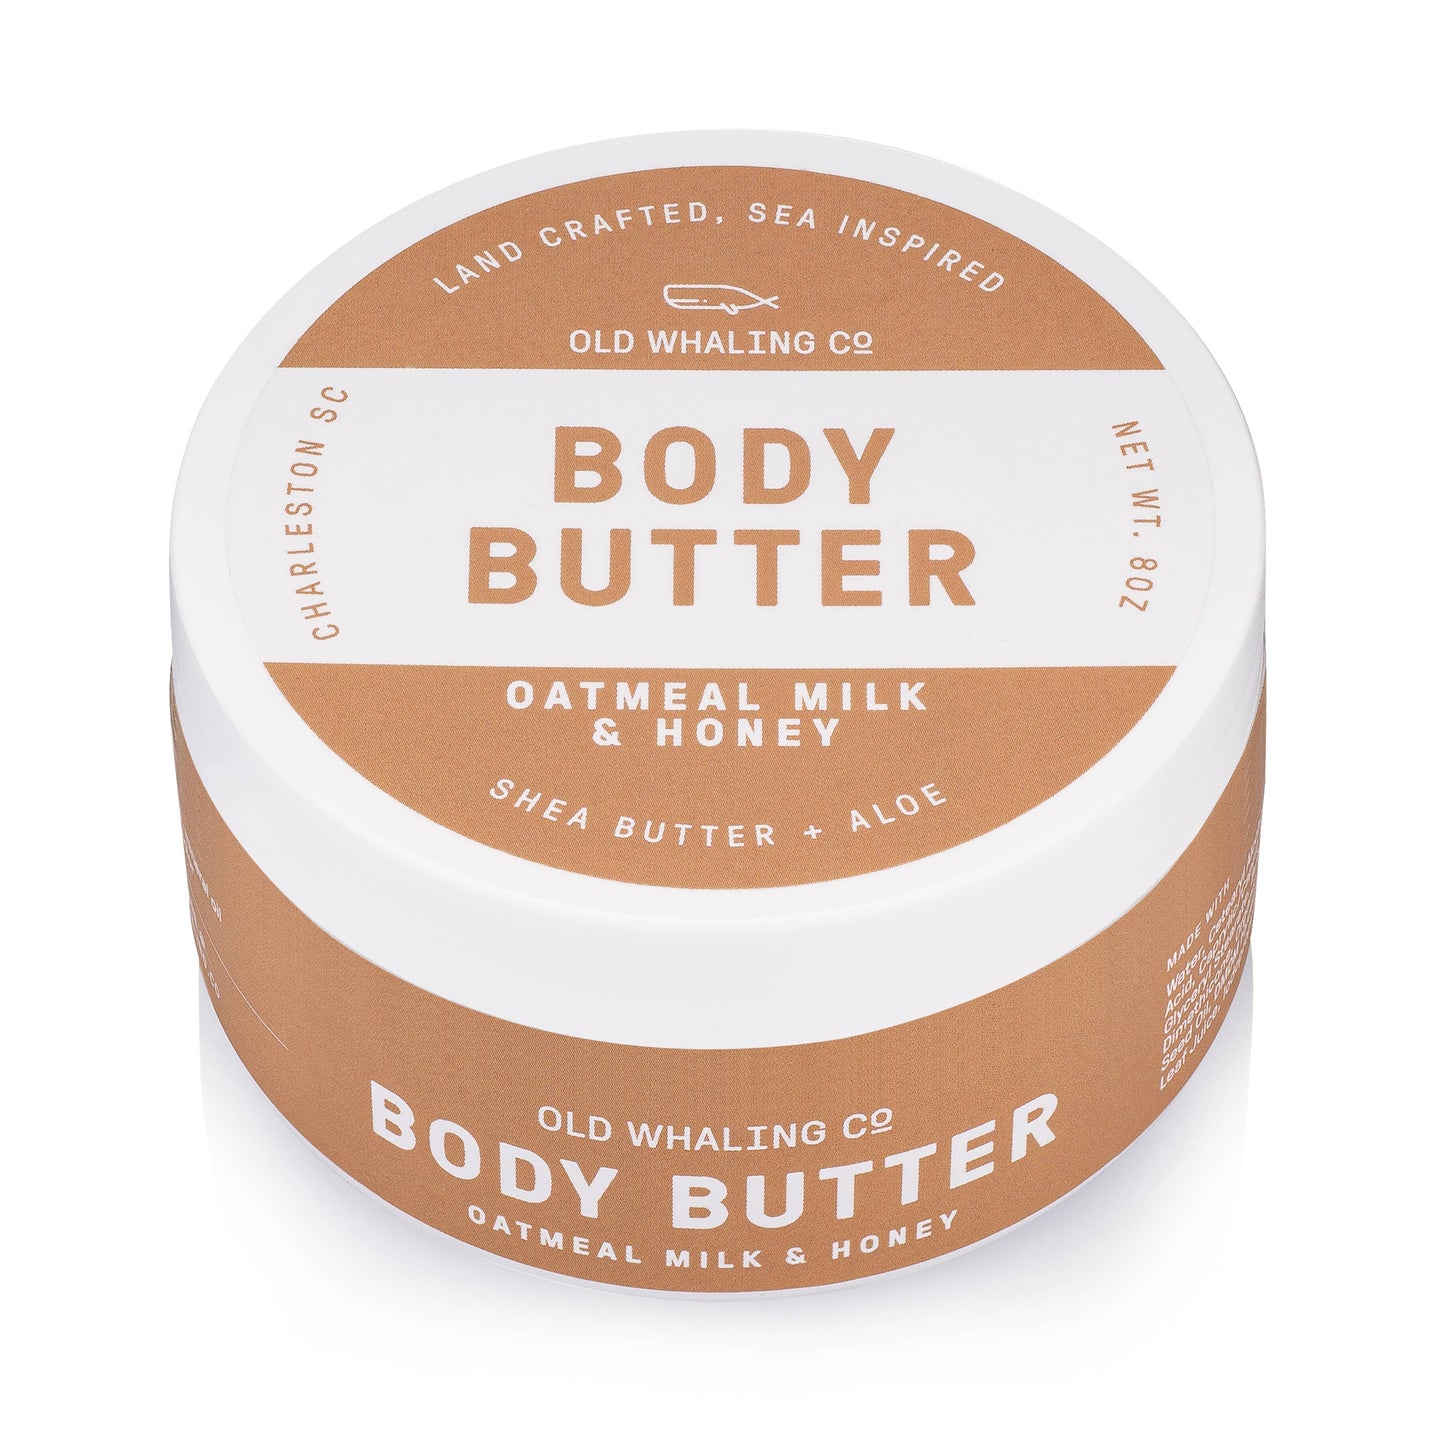 8oz Oatmeal Milk & Honey Body Butter